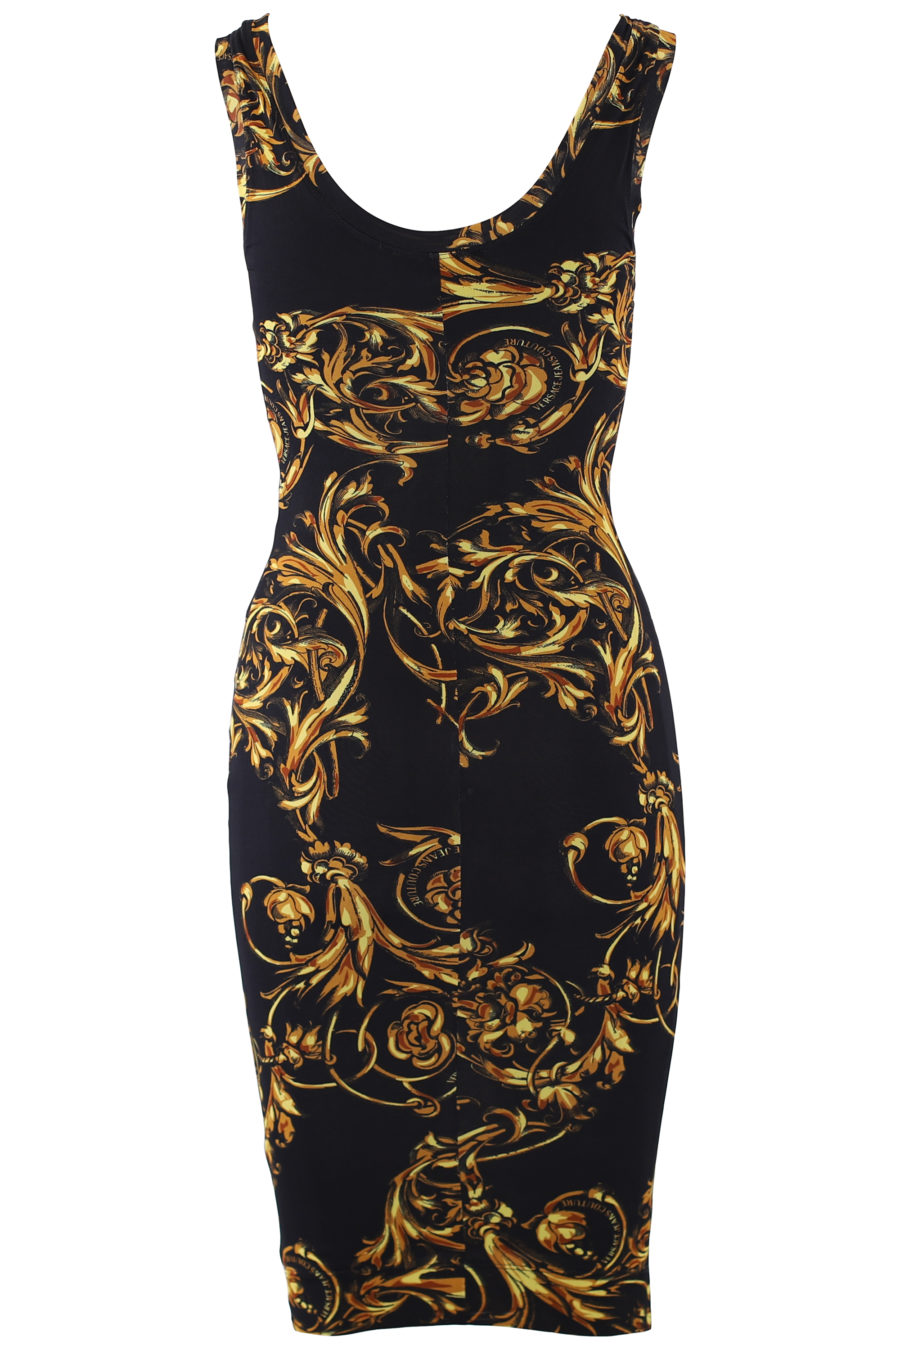 Black elastic dress with baroque print - IMG 1270